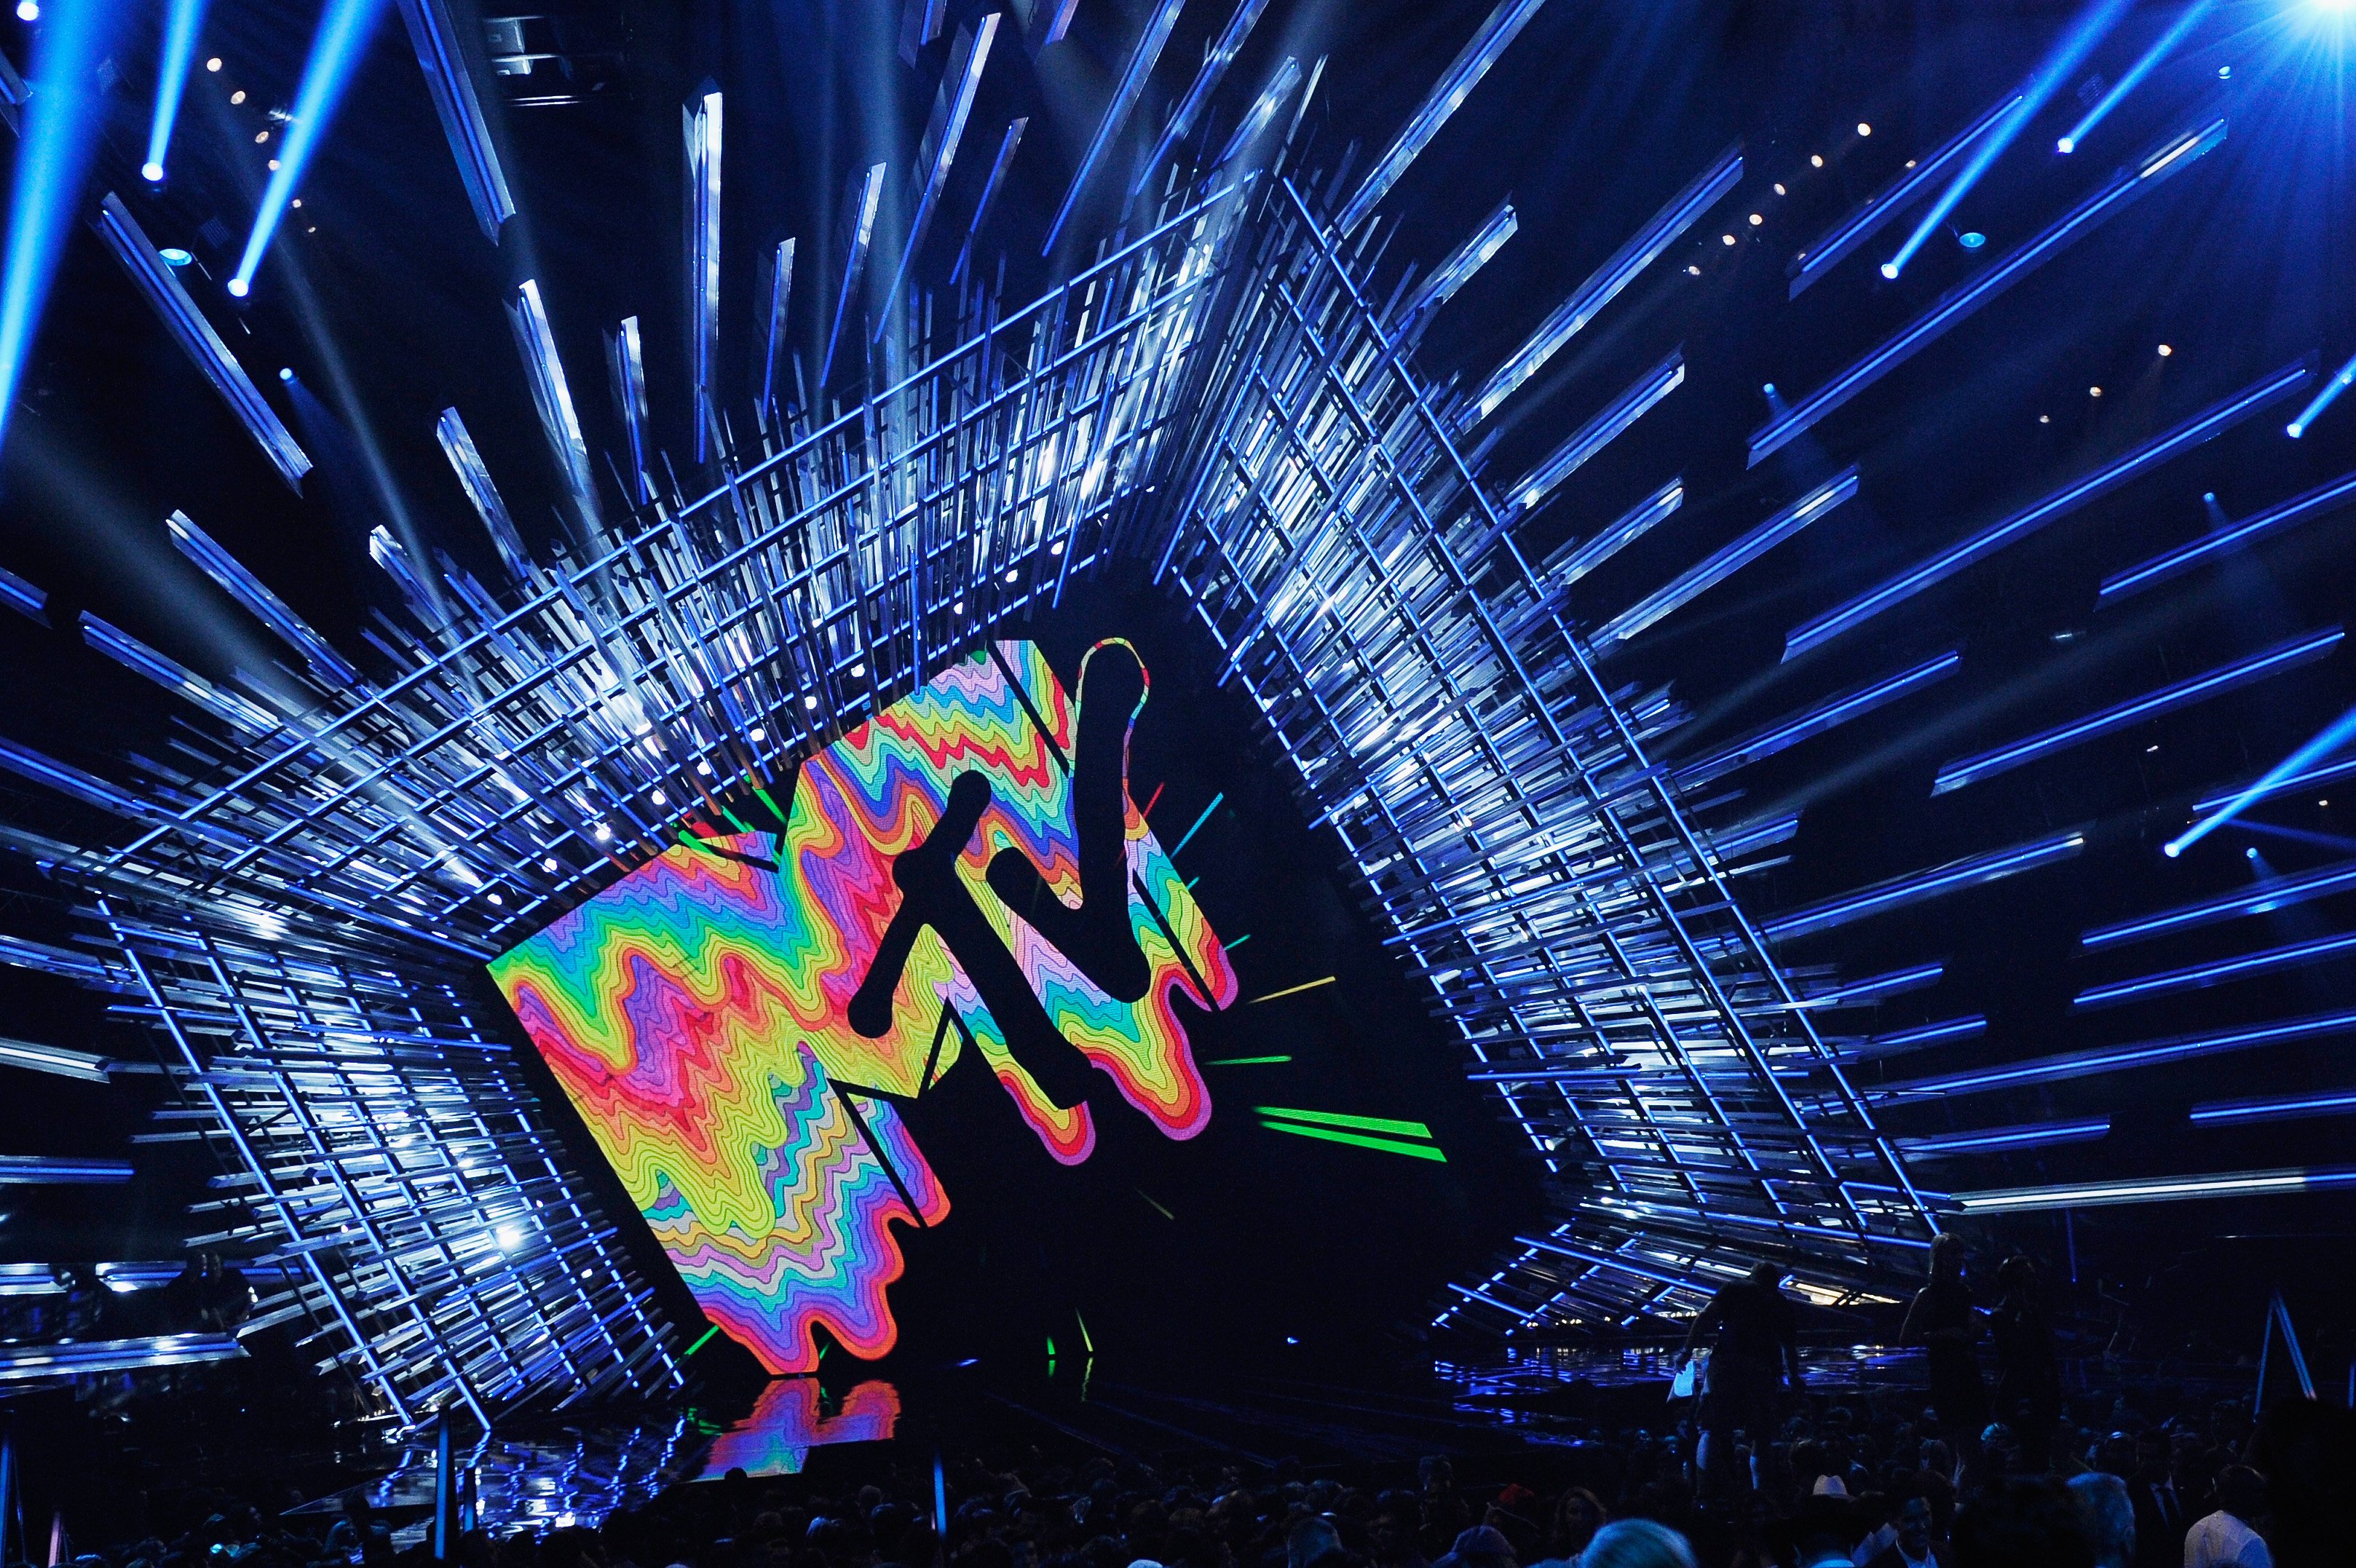 MTV Logo is seen onstage